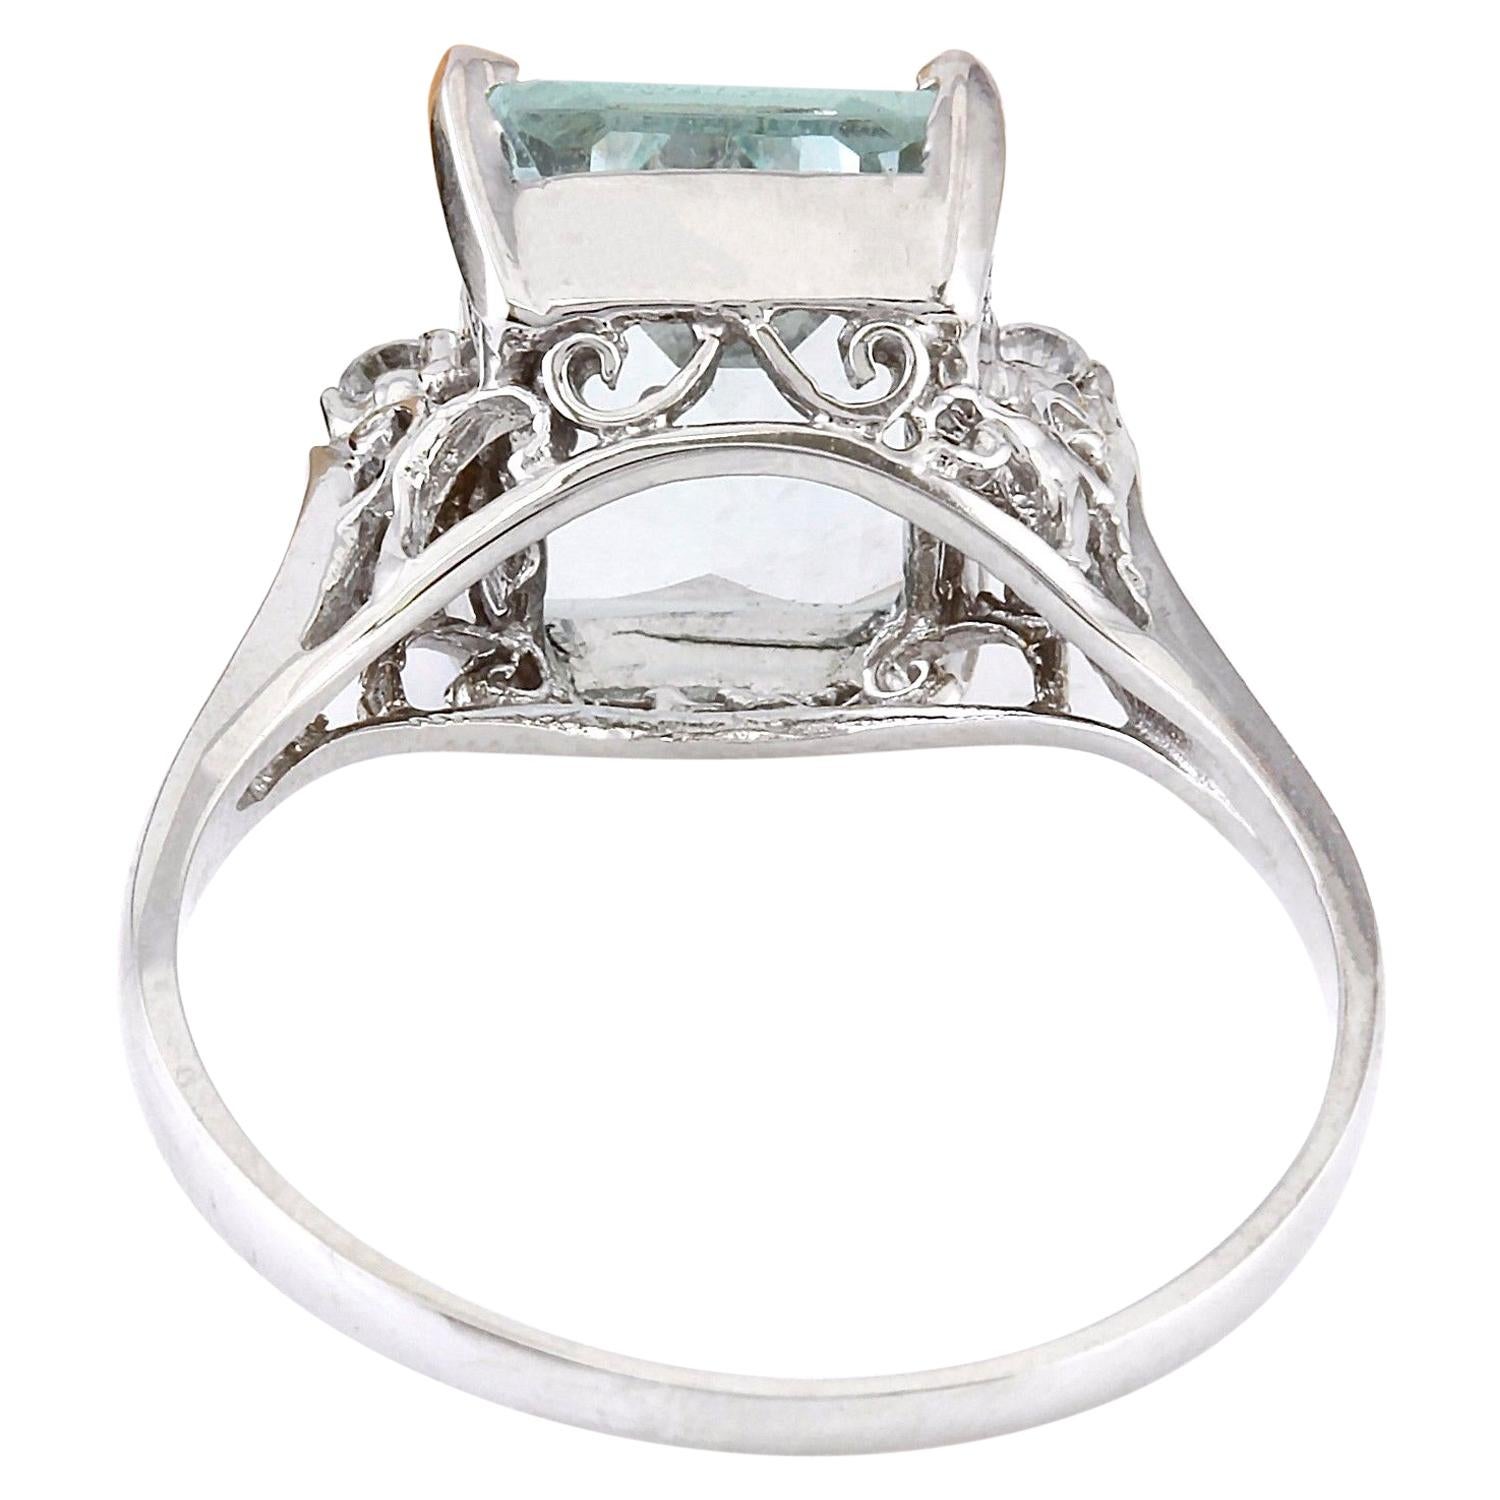 Emerald Cut 4.34 Carat Natural Aquamarine 14 Karat Solid White Gold Diamond Ring For Sale